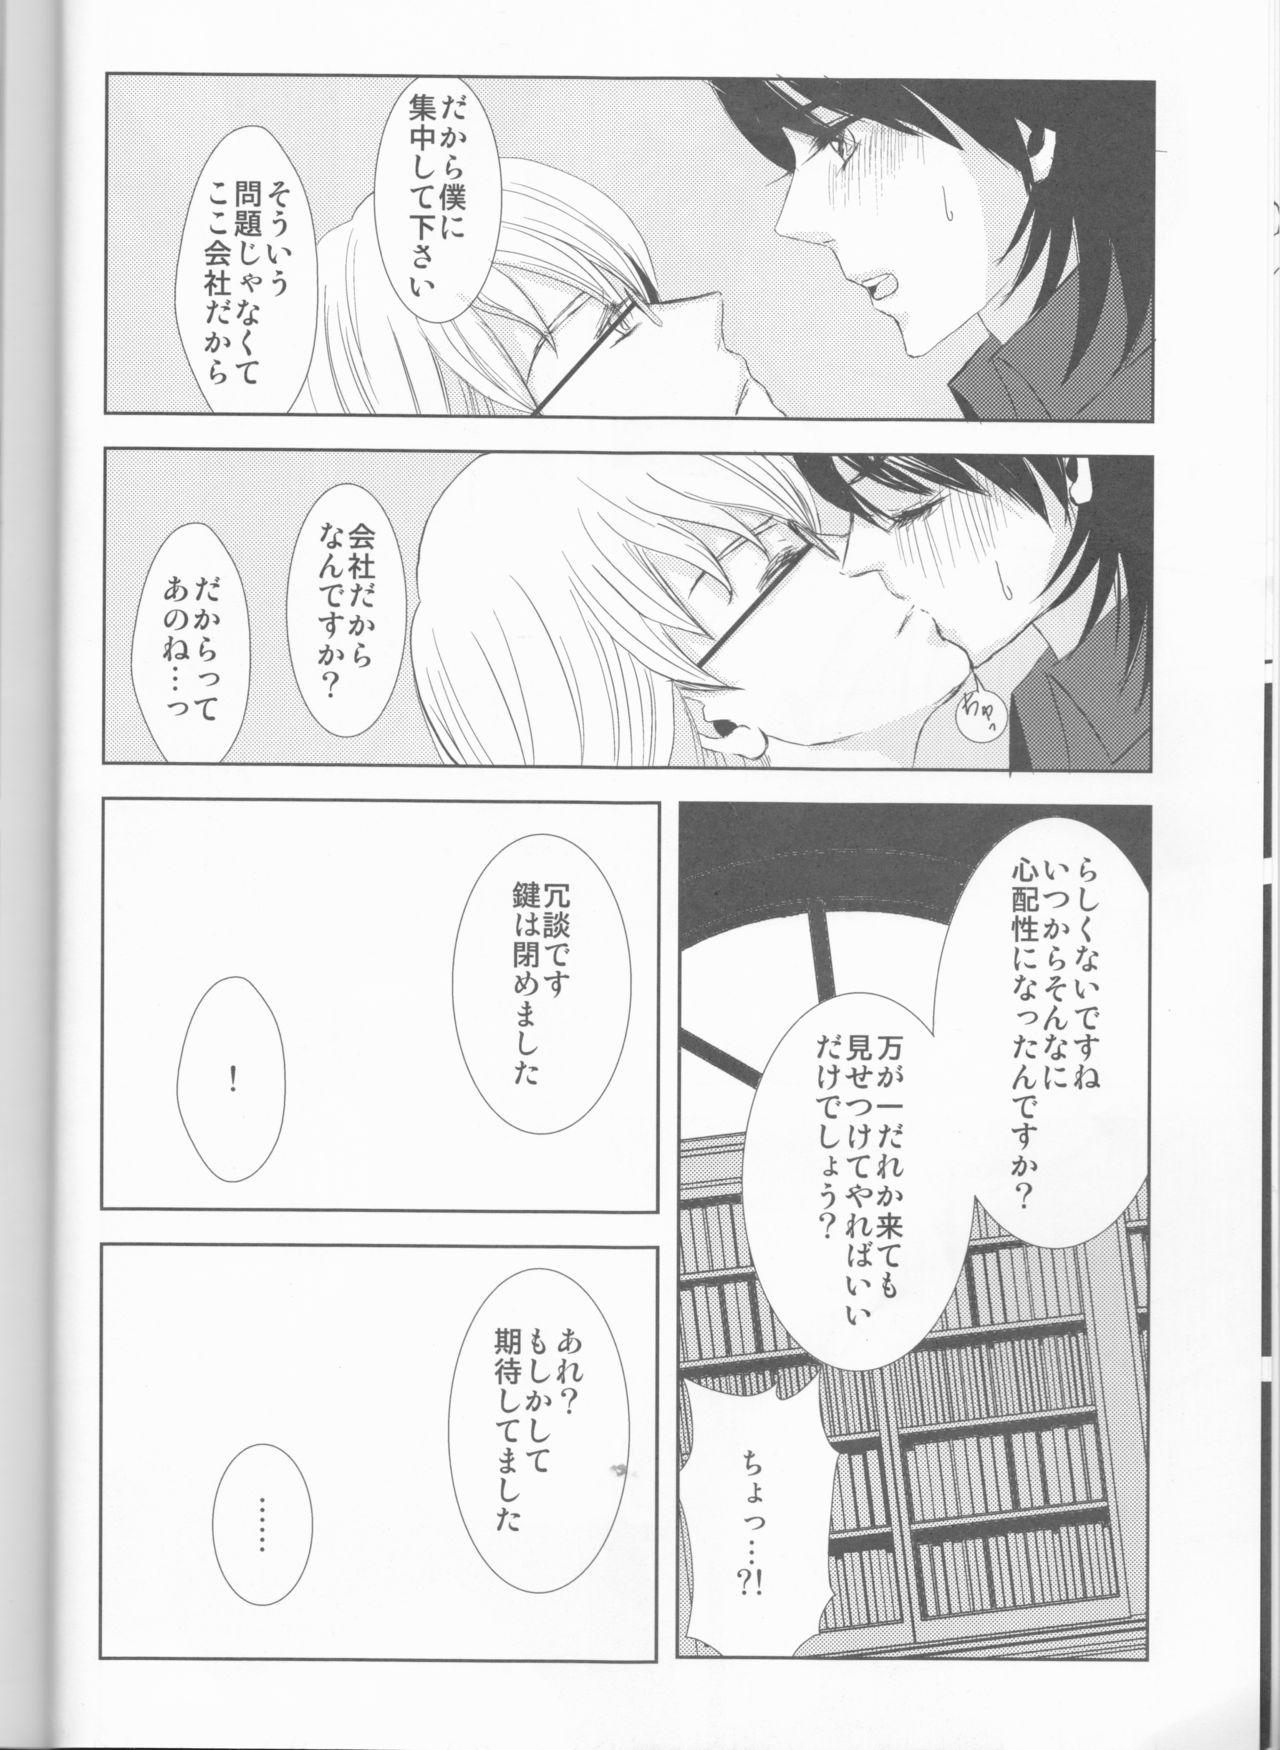 Adult Itsuka wa inaku naru kimi e - Tiger and bunny Bottom - Page 7